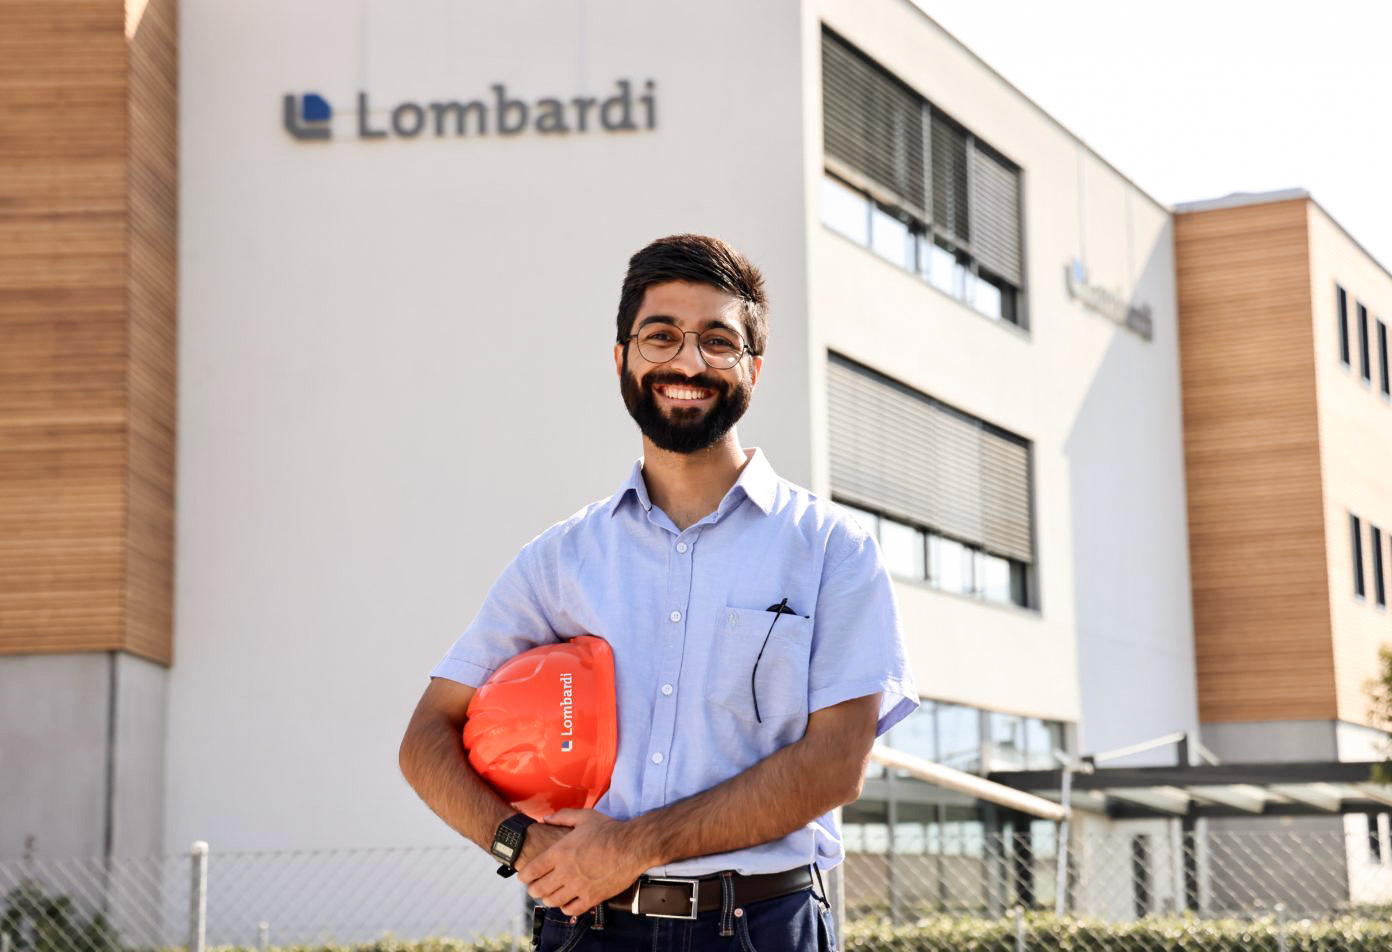 Lombardi careers benefits image